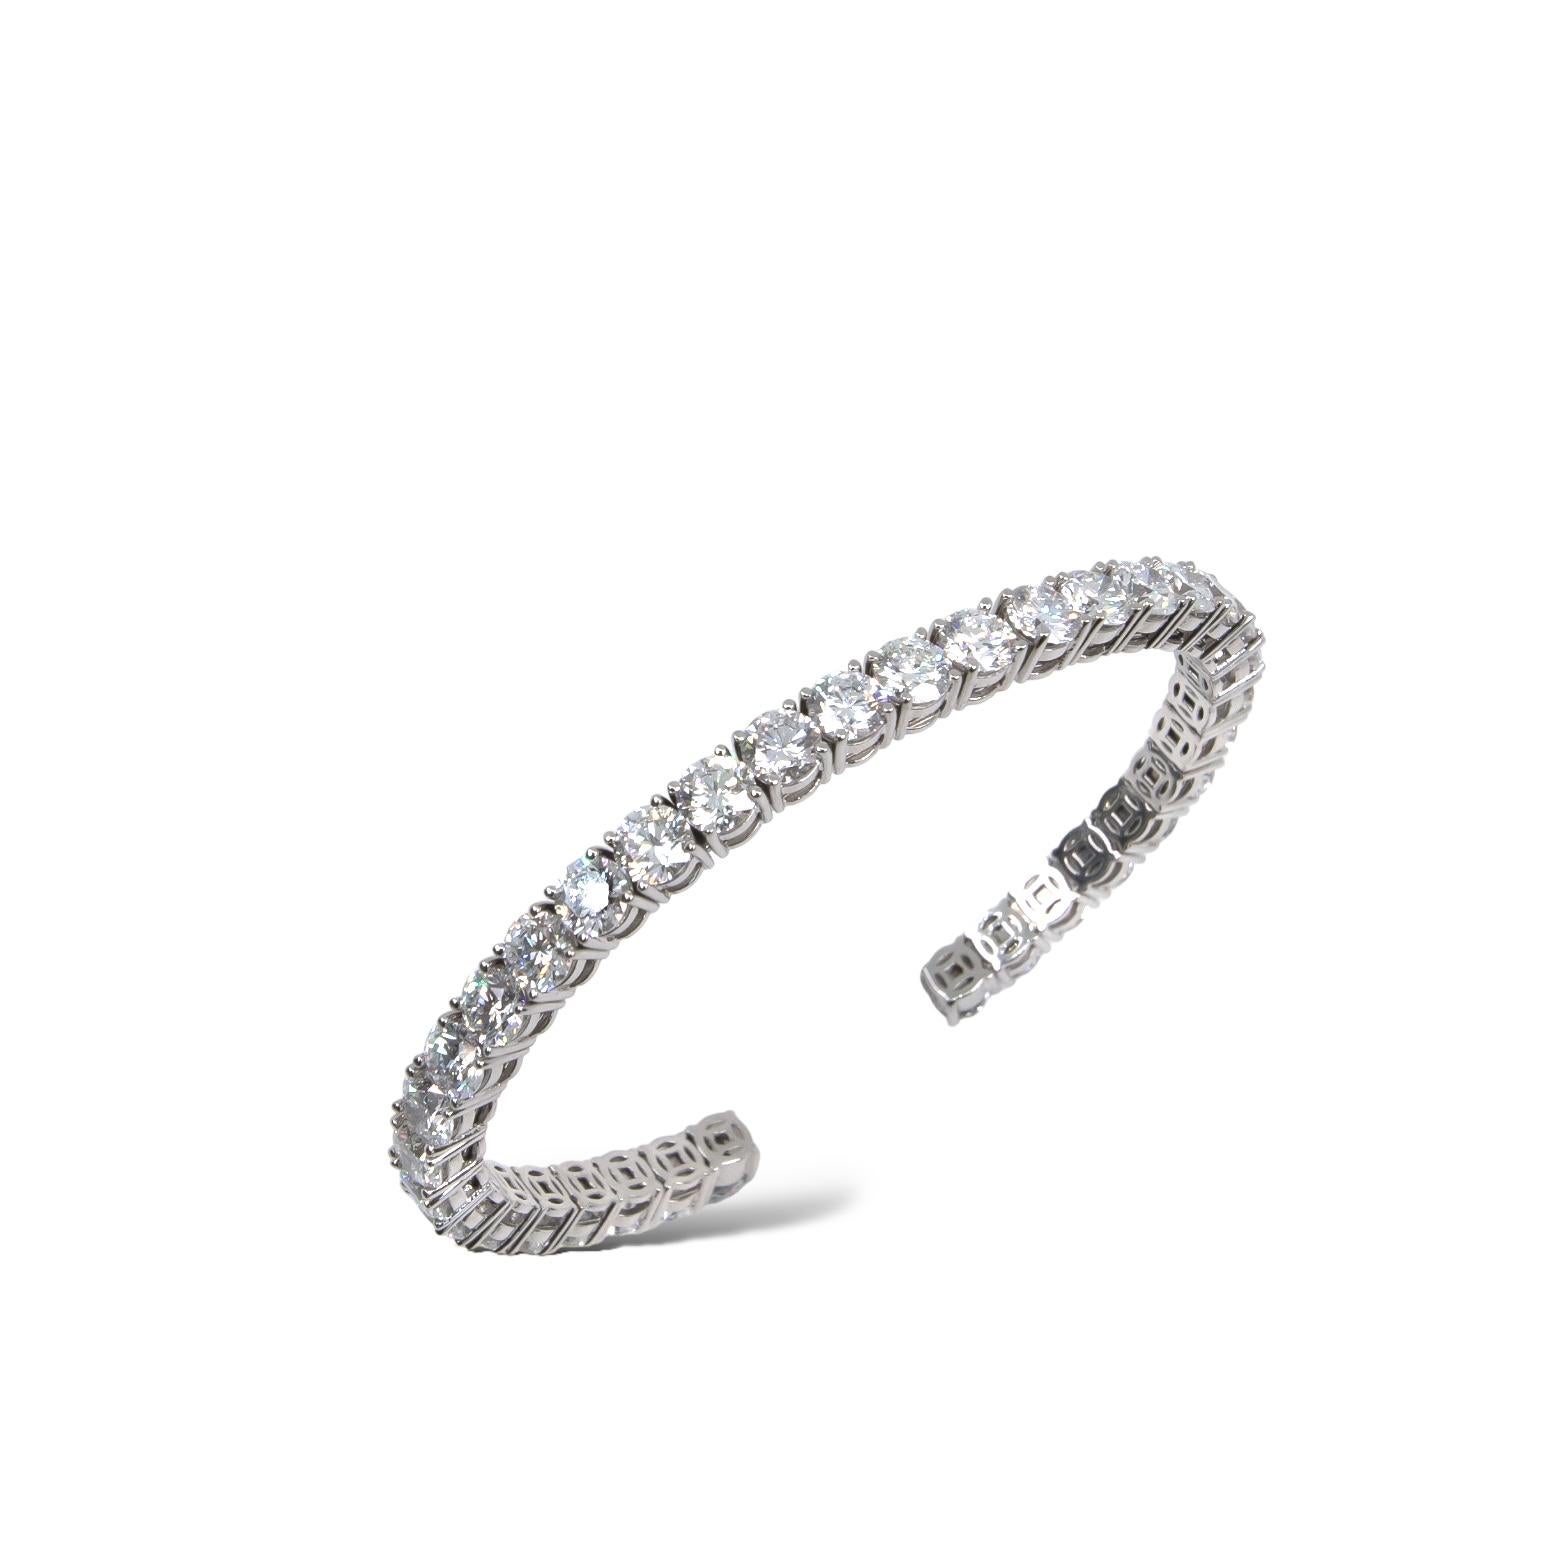 Round Cut 11 carat Diamond Tennis Bracelet Flexible Bangle in 18k Gold or Platinum For Sale